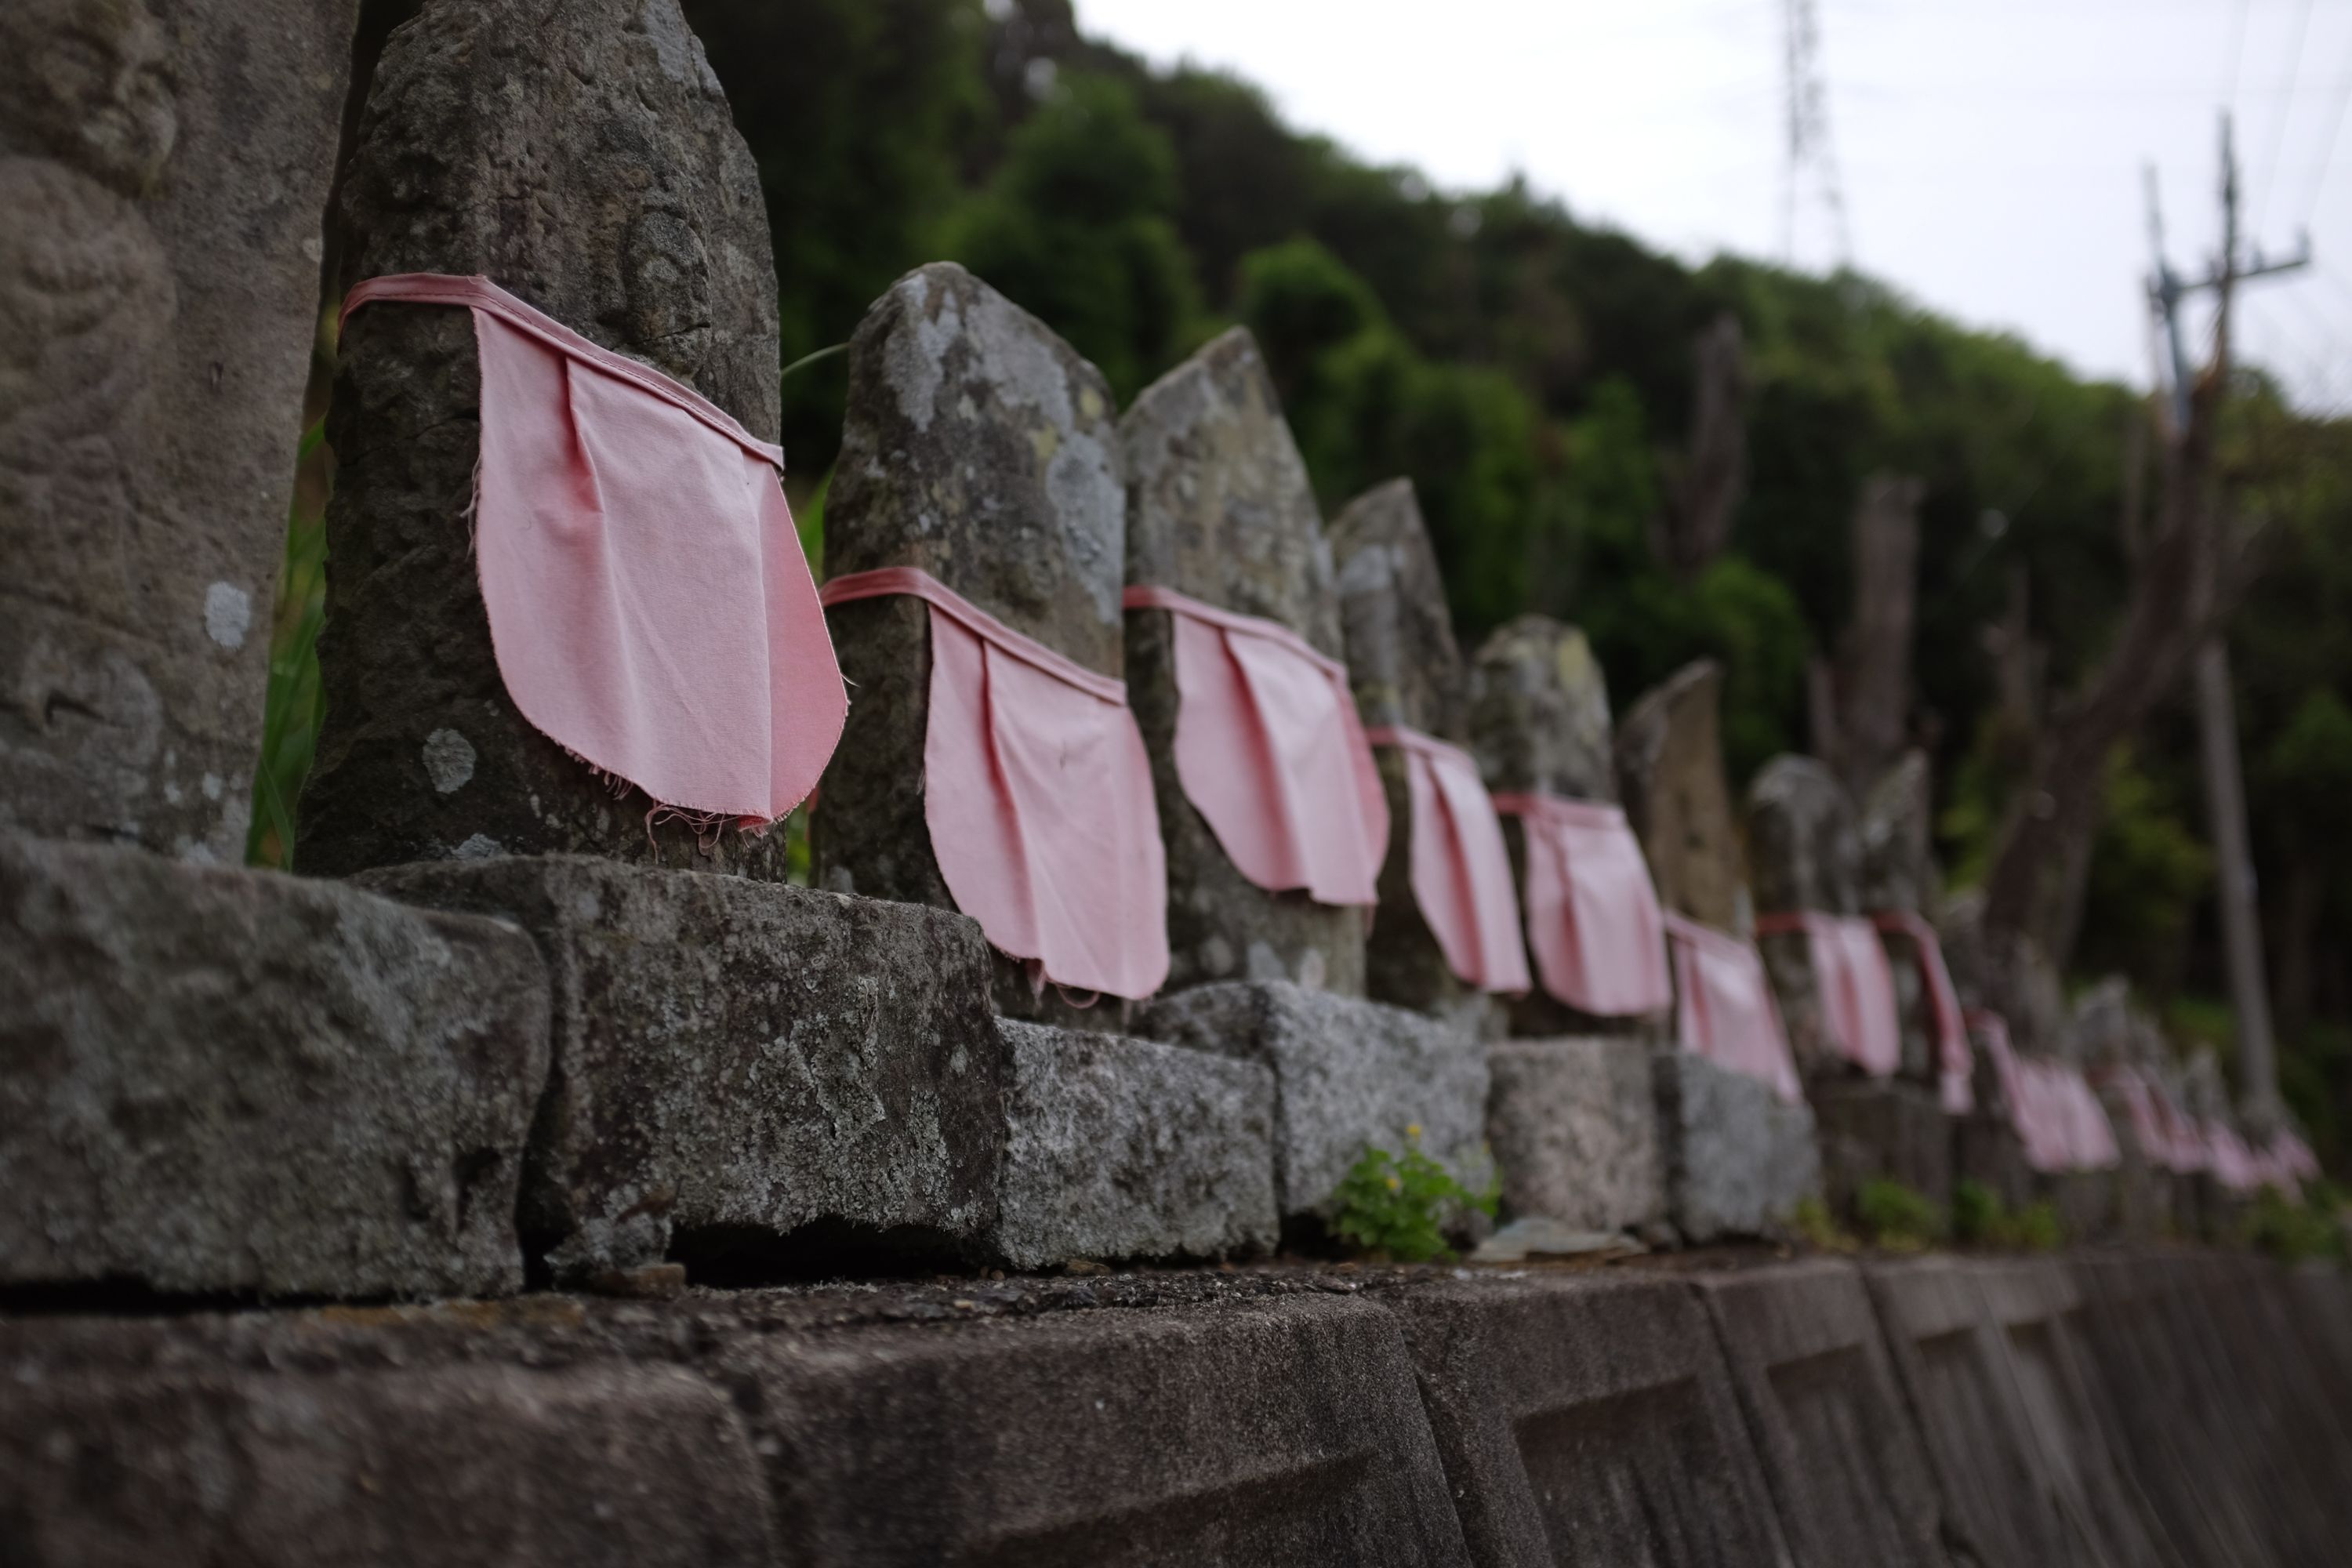 Roadside Buddhist statues wearing pink aprons.